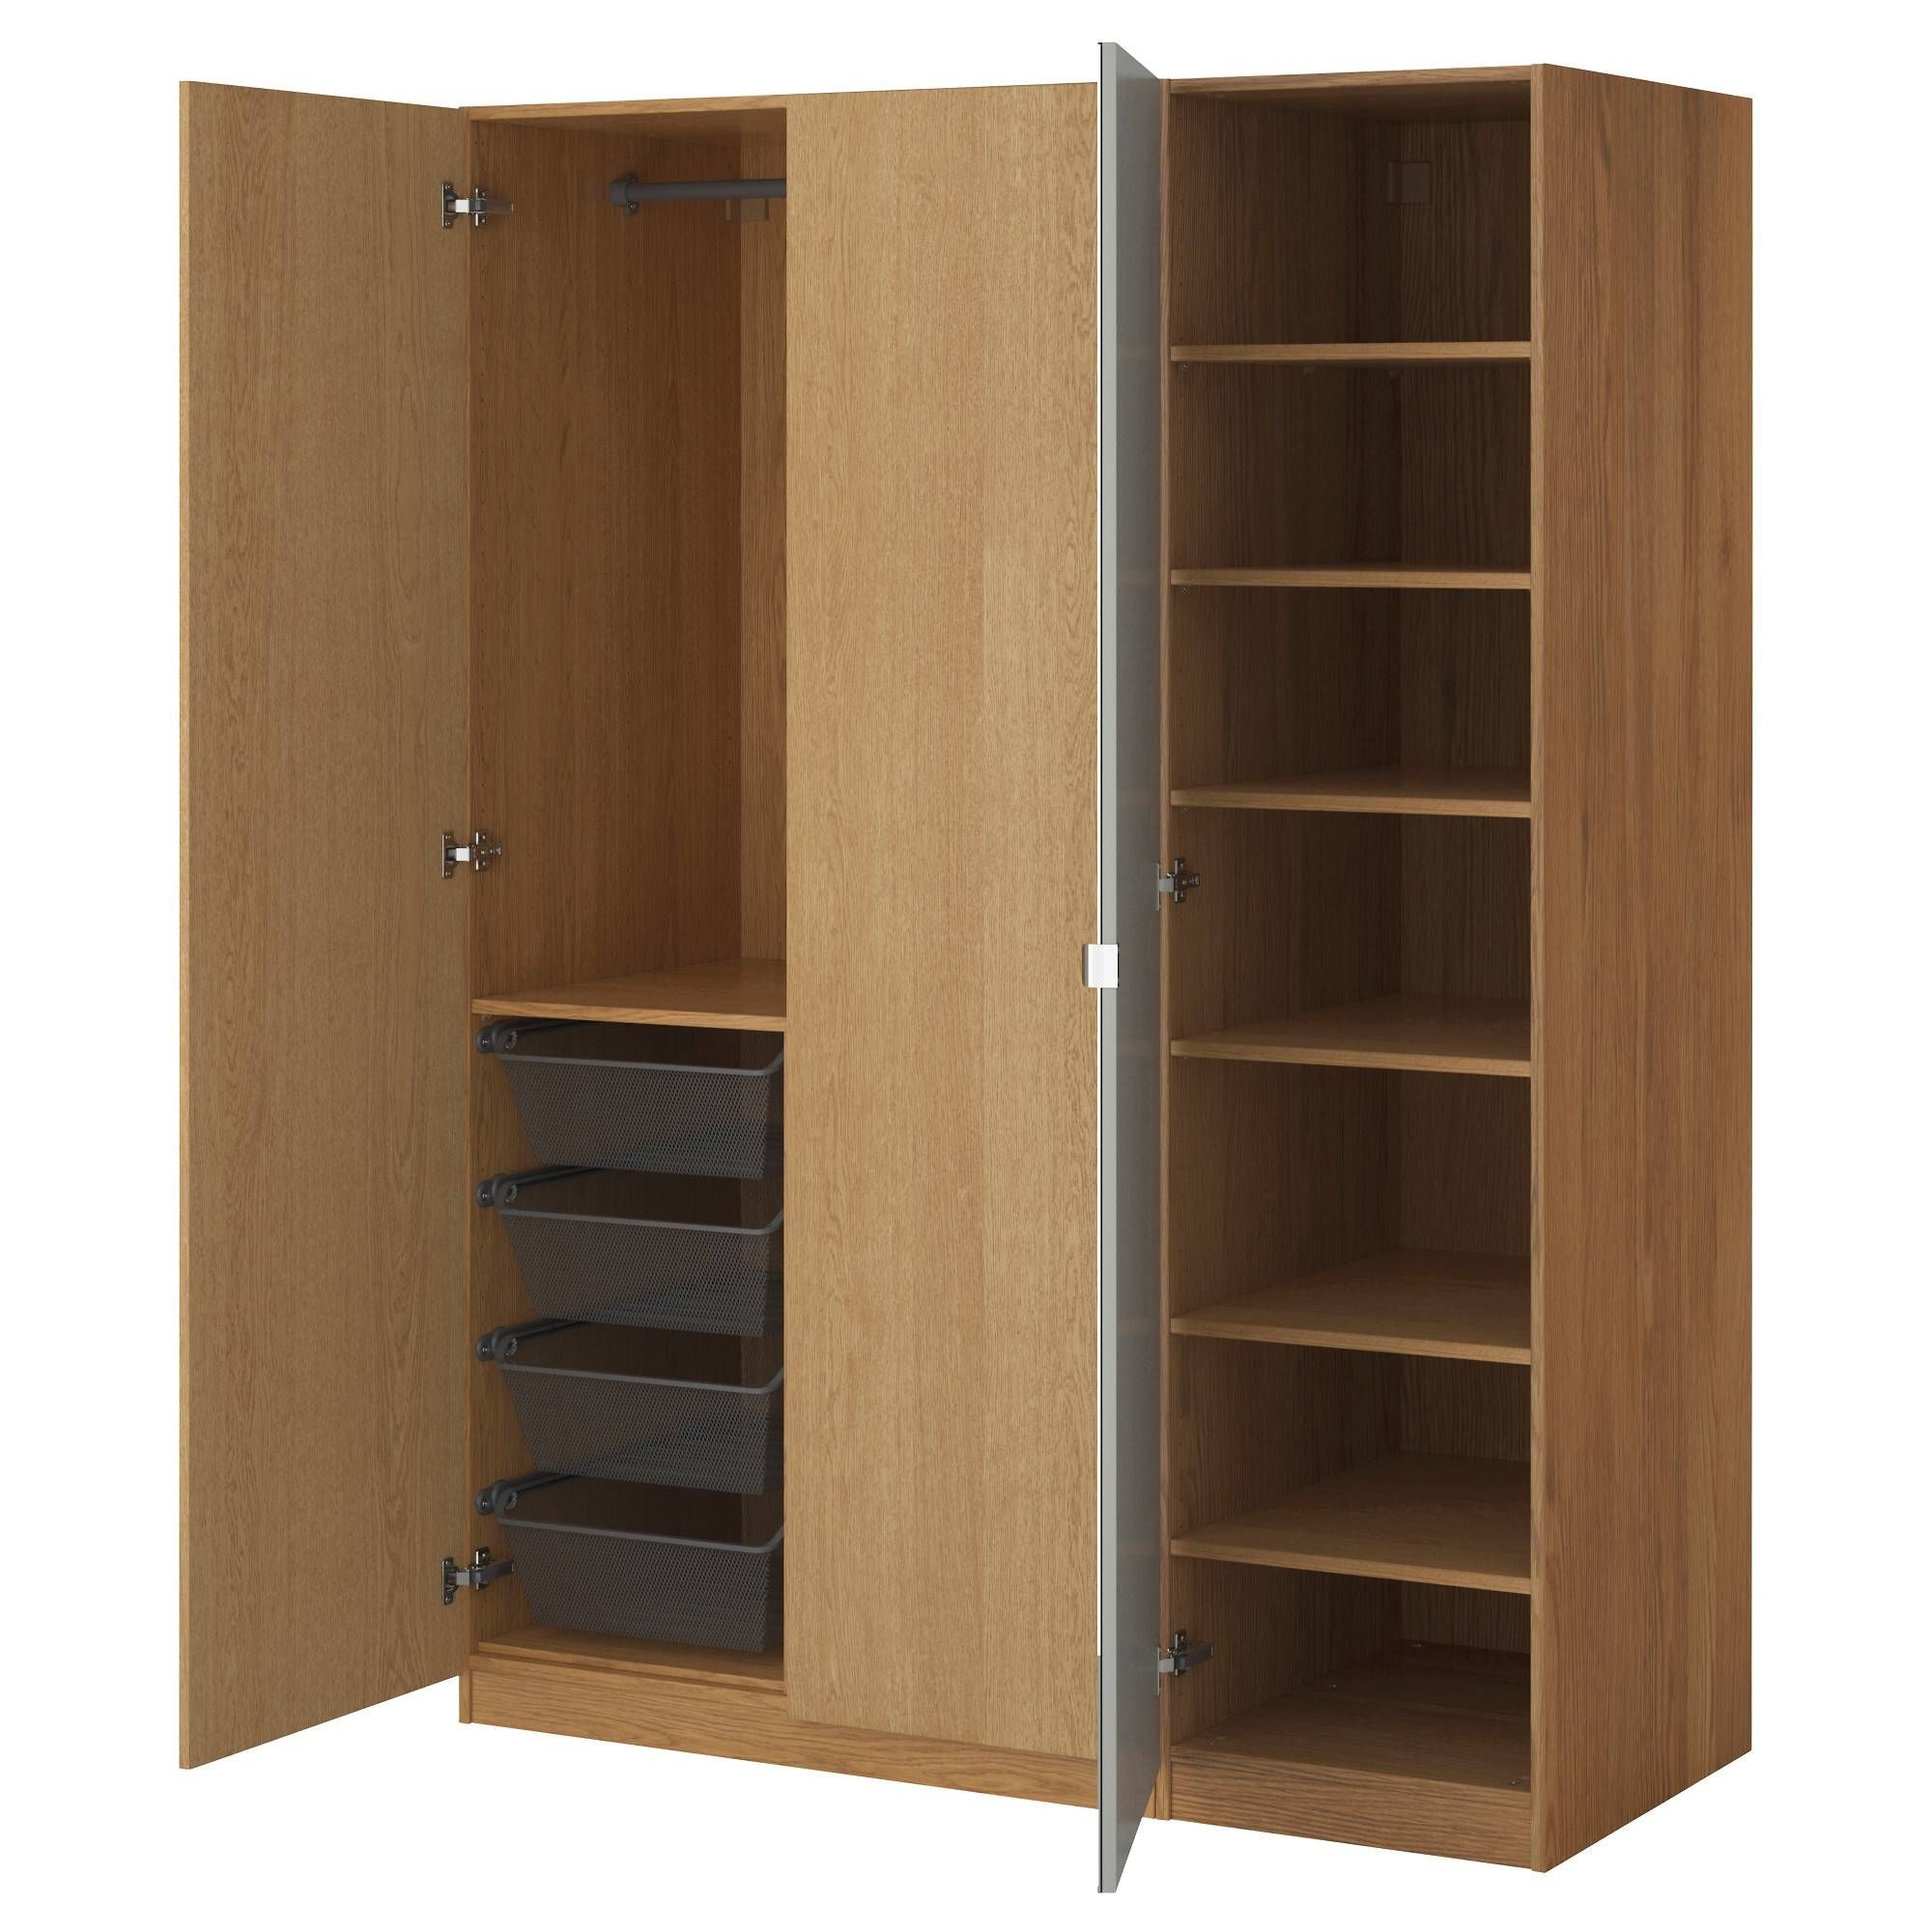 Wardrobes | Ikea Regarding Wardrobes With Shelves (View 2 of 30)